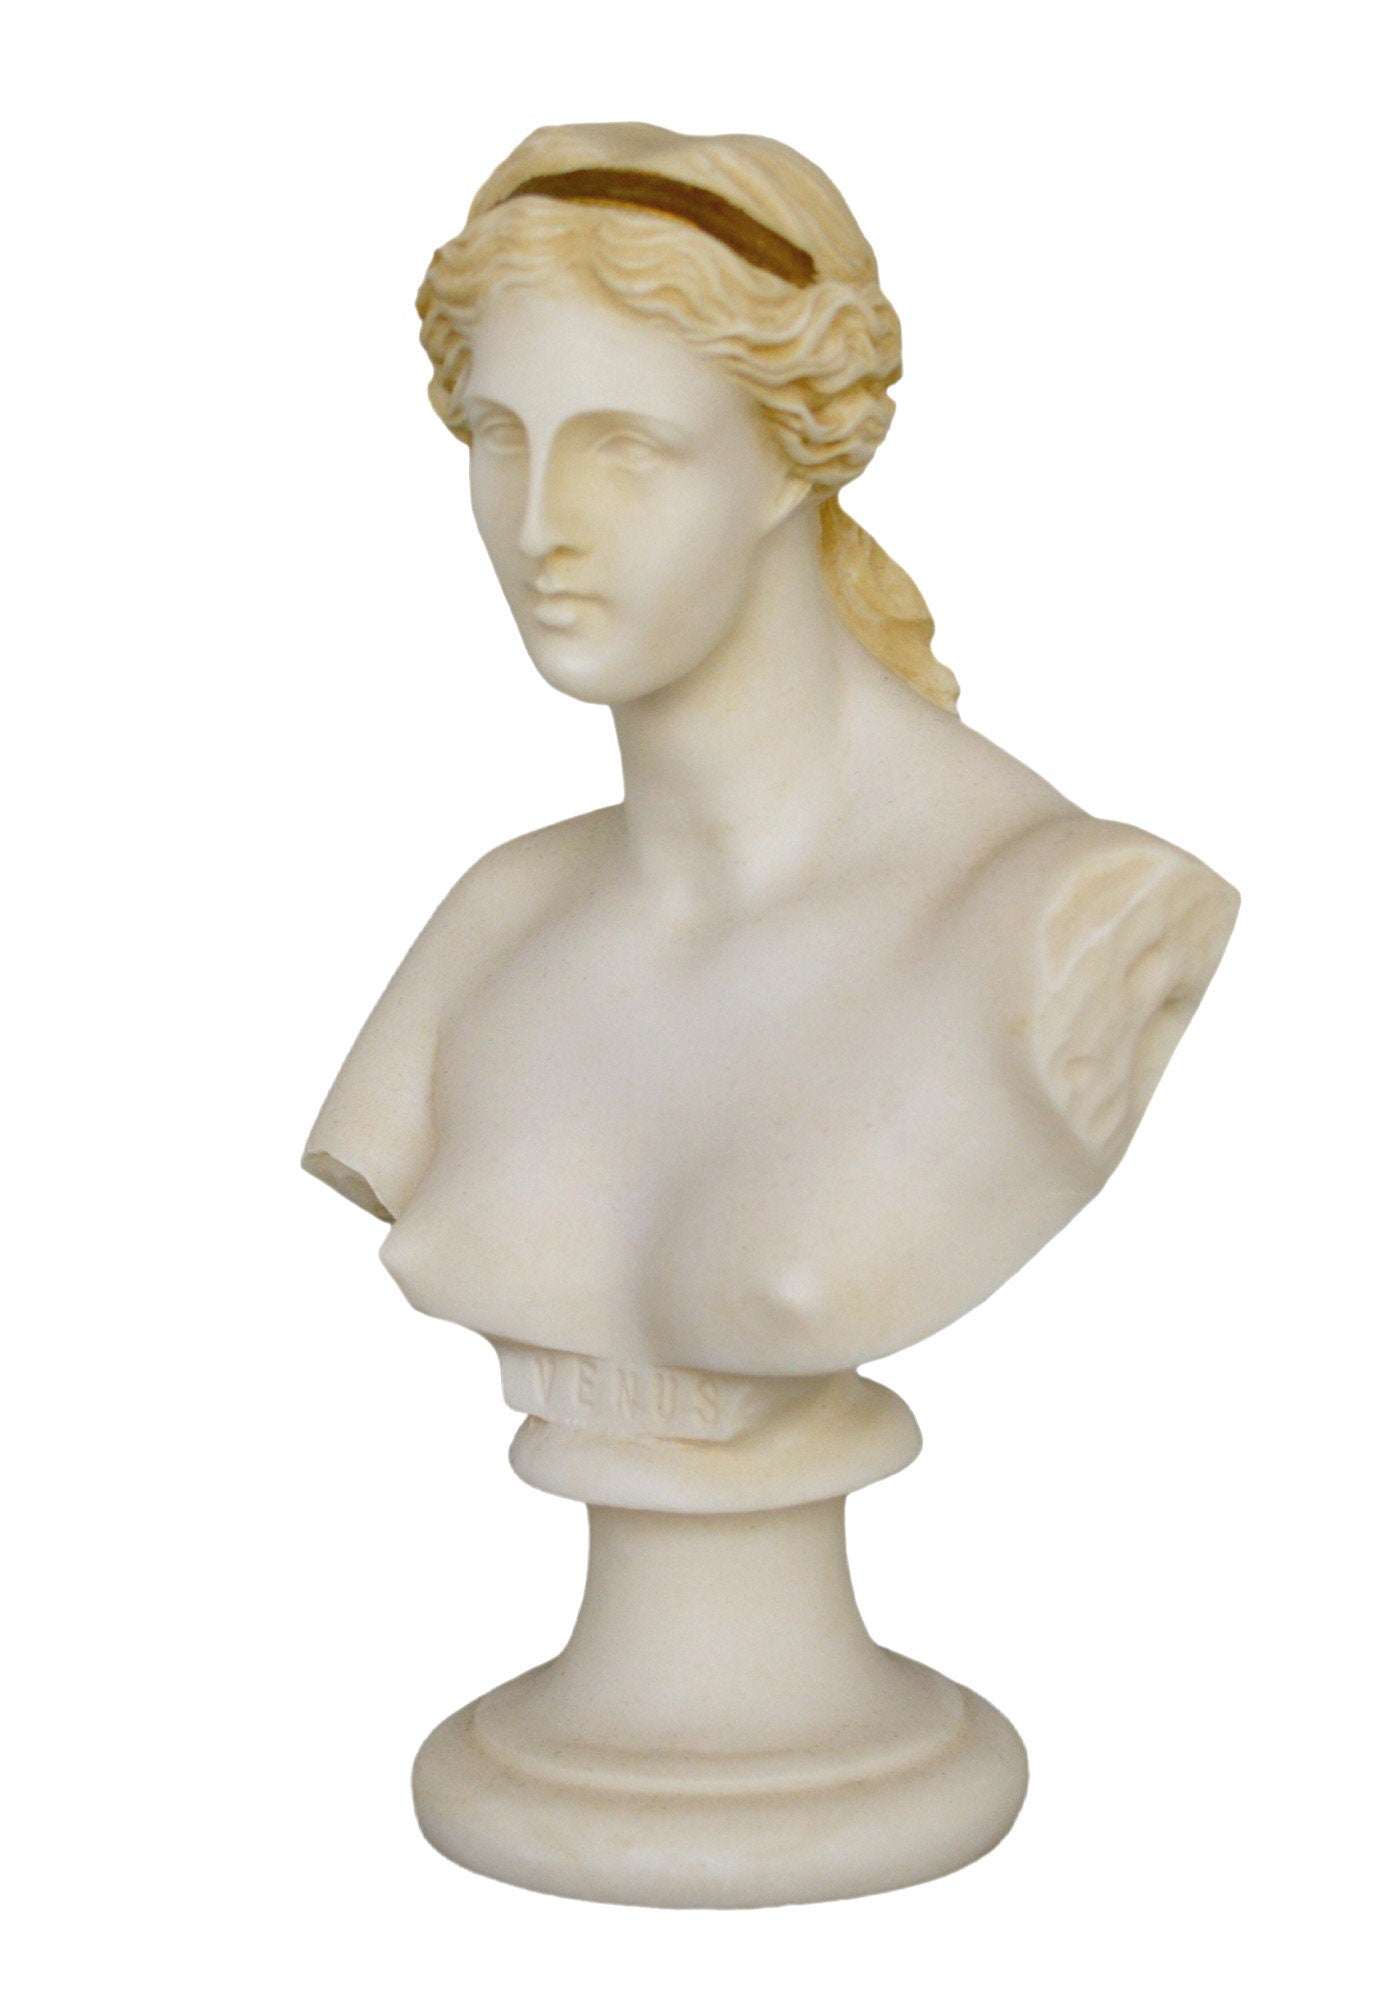 Aphrodite Venus Bust - Greek Roman Goddess of Love, Beauty, Sexual Pleasure, Fertility - Aged Alabaster Statue